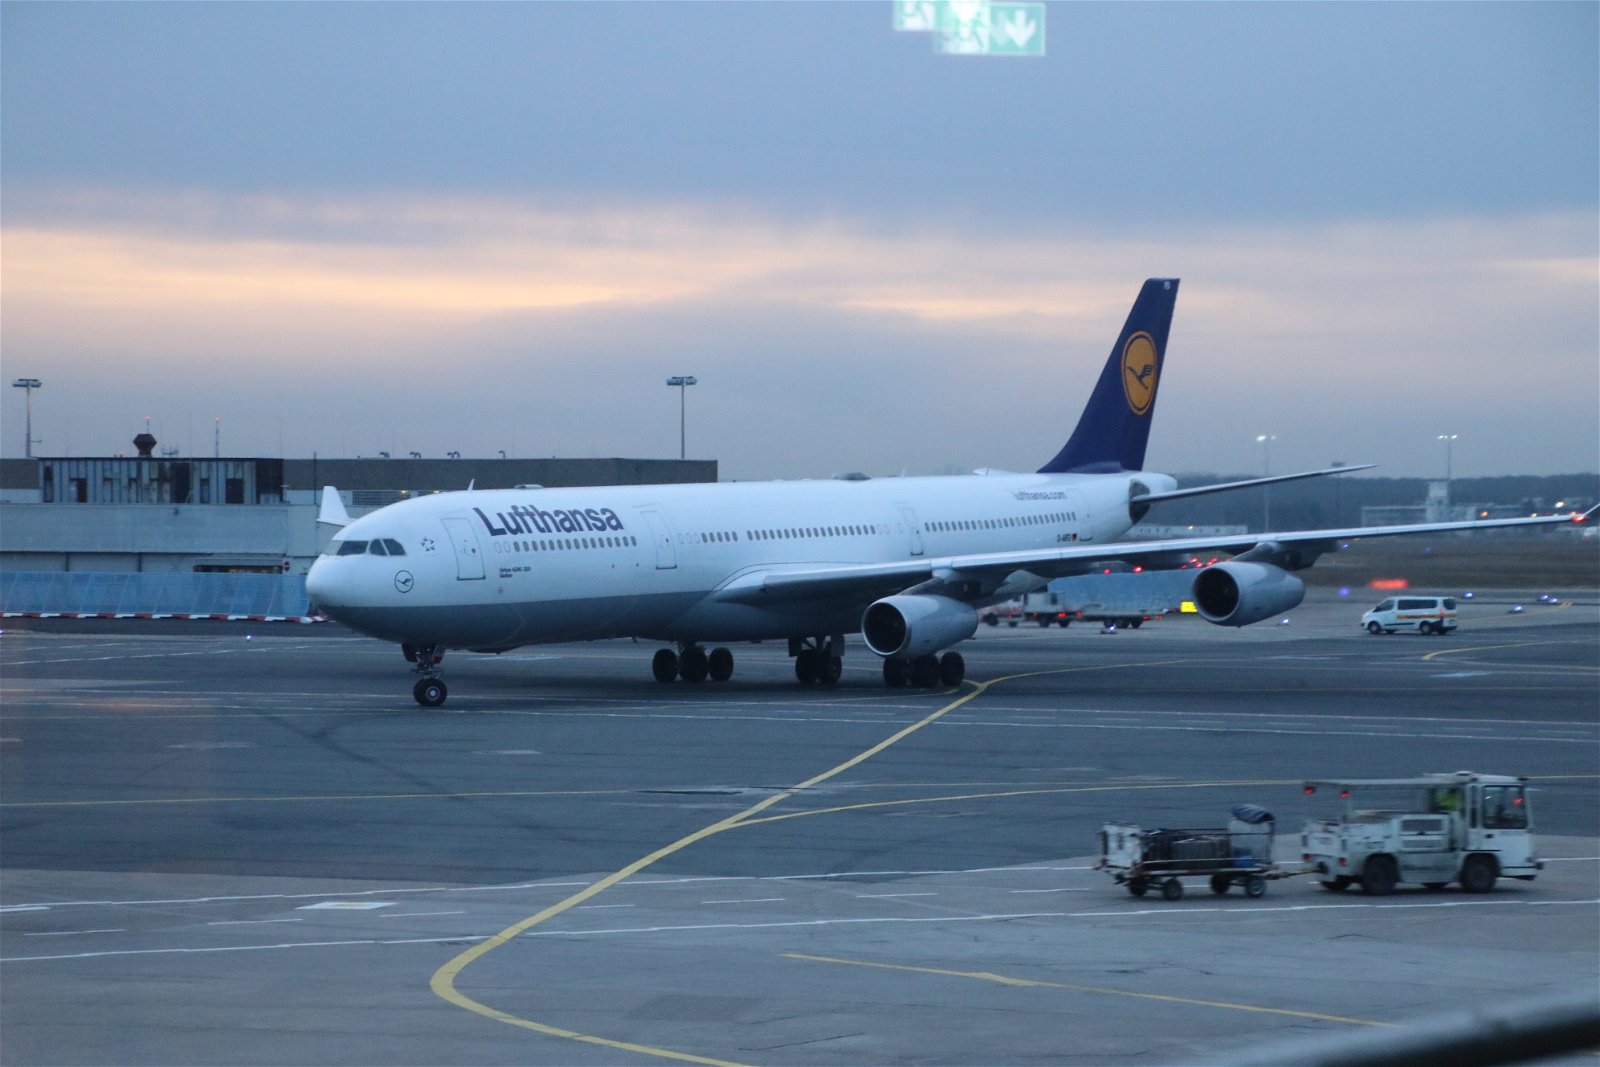 Frankfurt Airport VIP services view